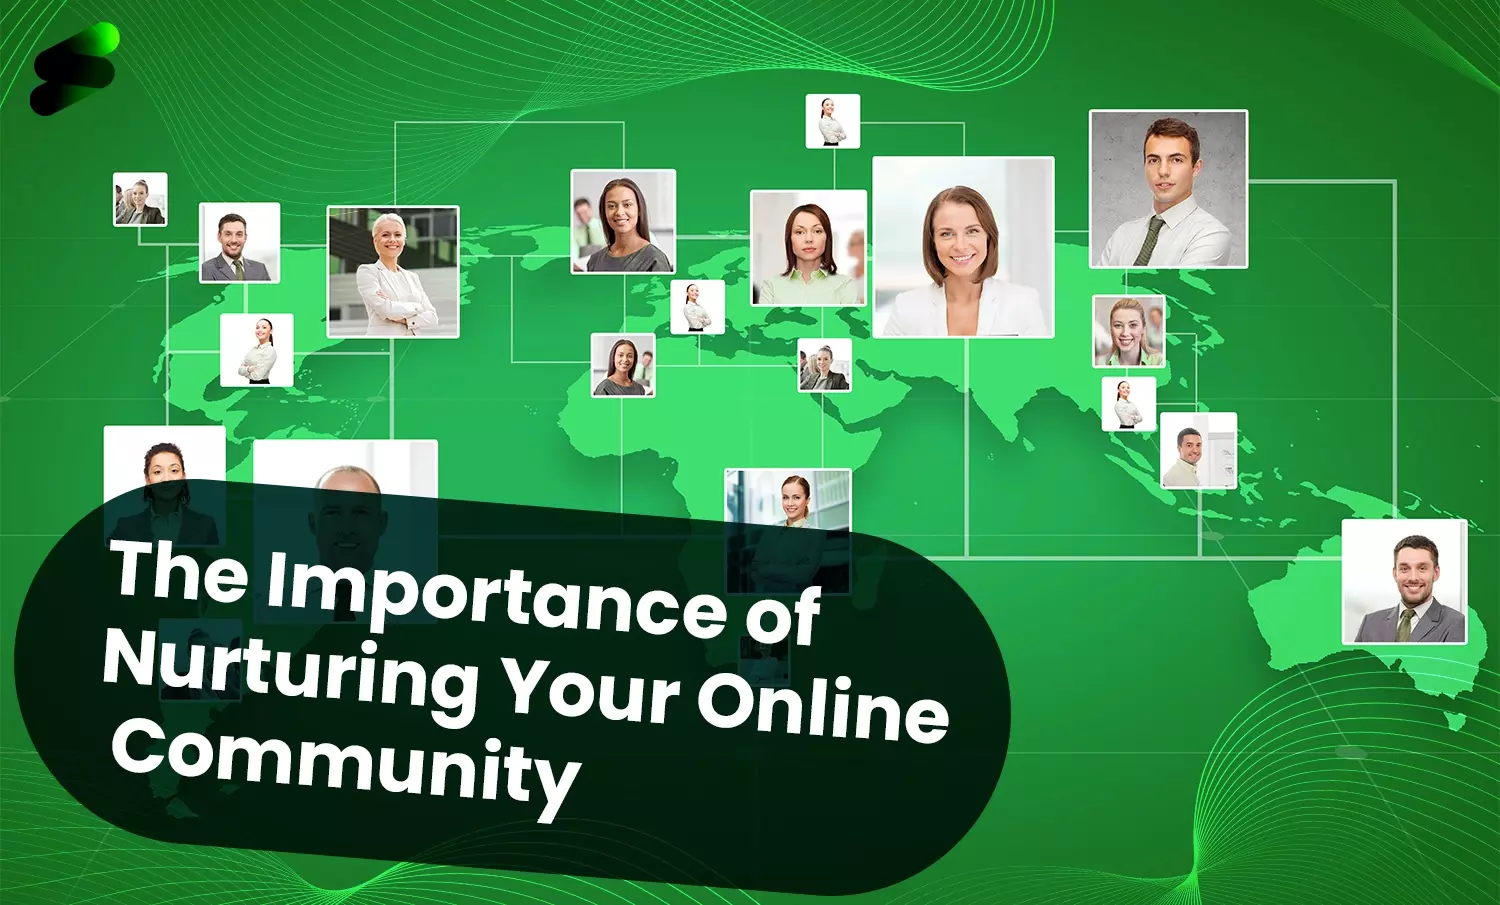 Examples of substantial Online Communities